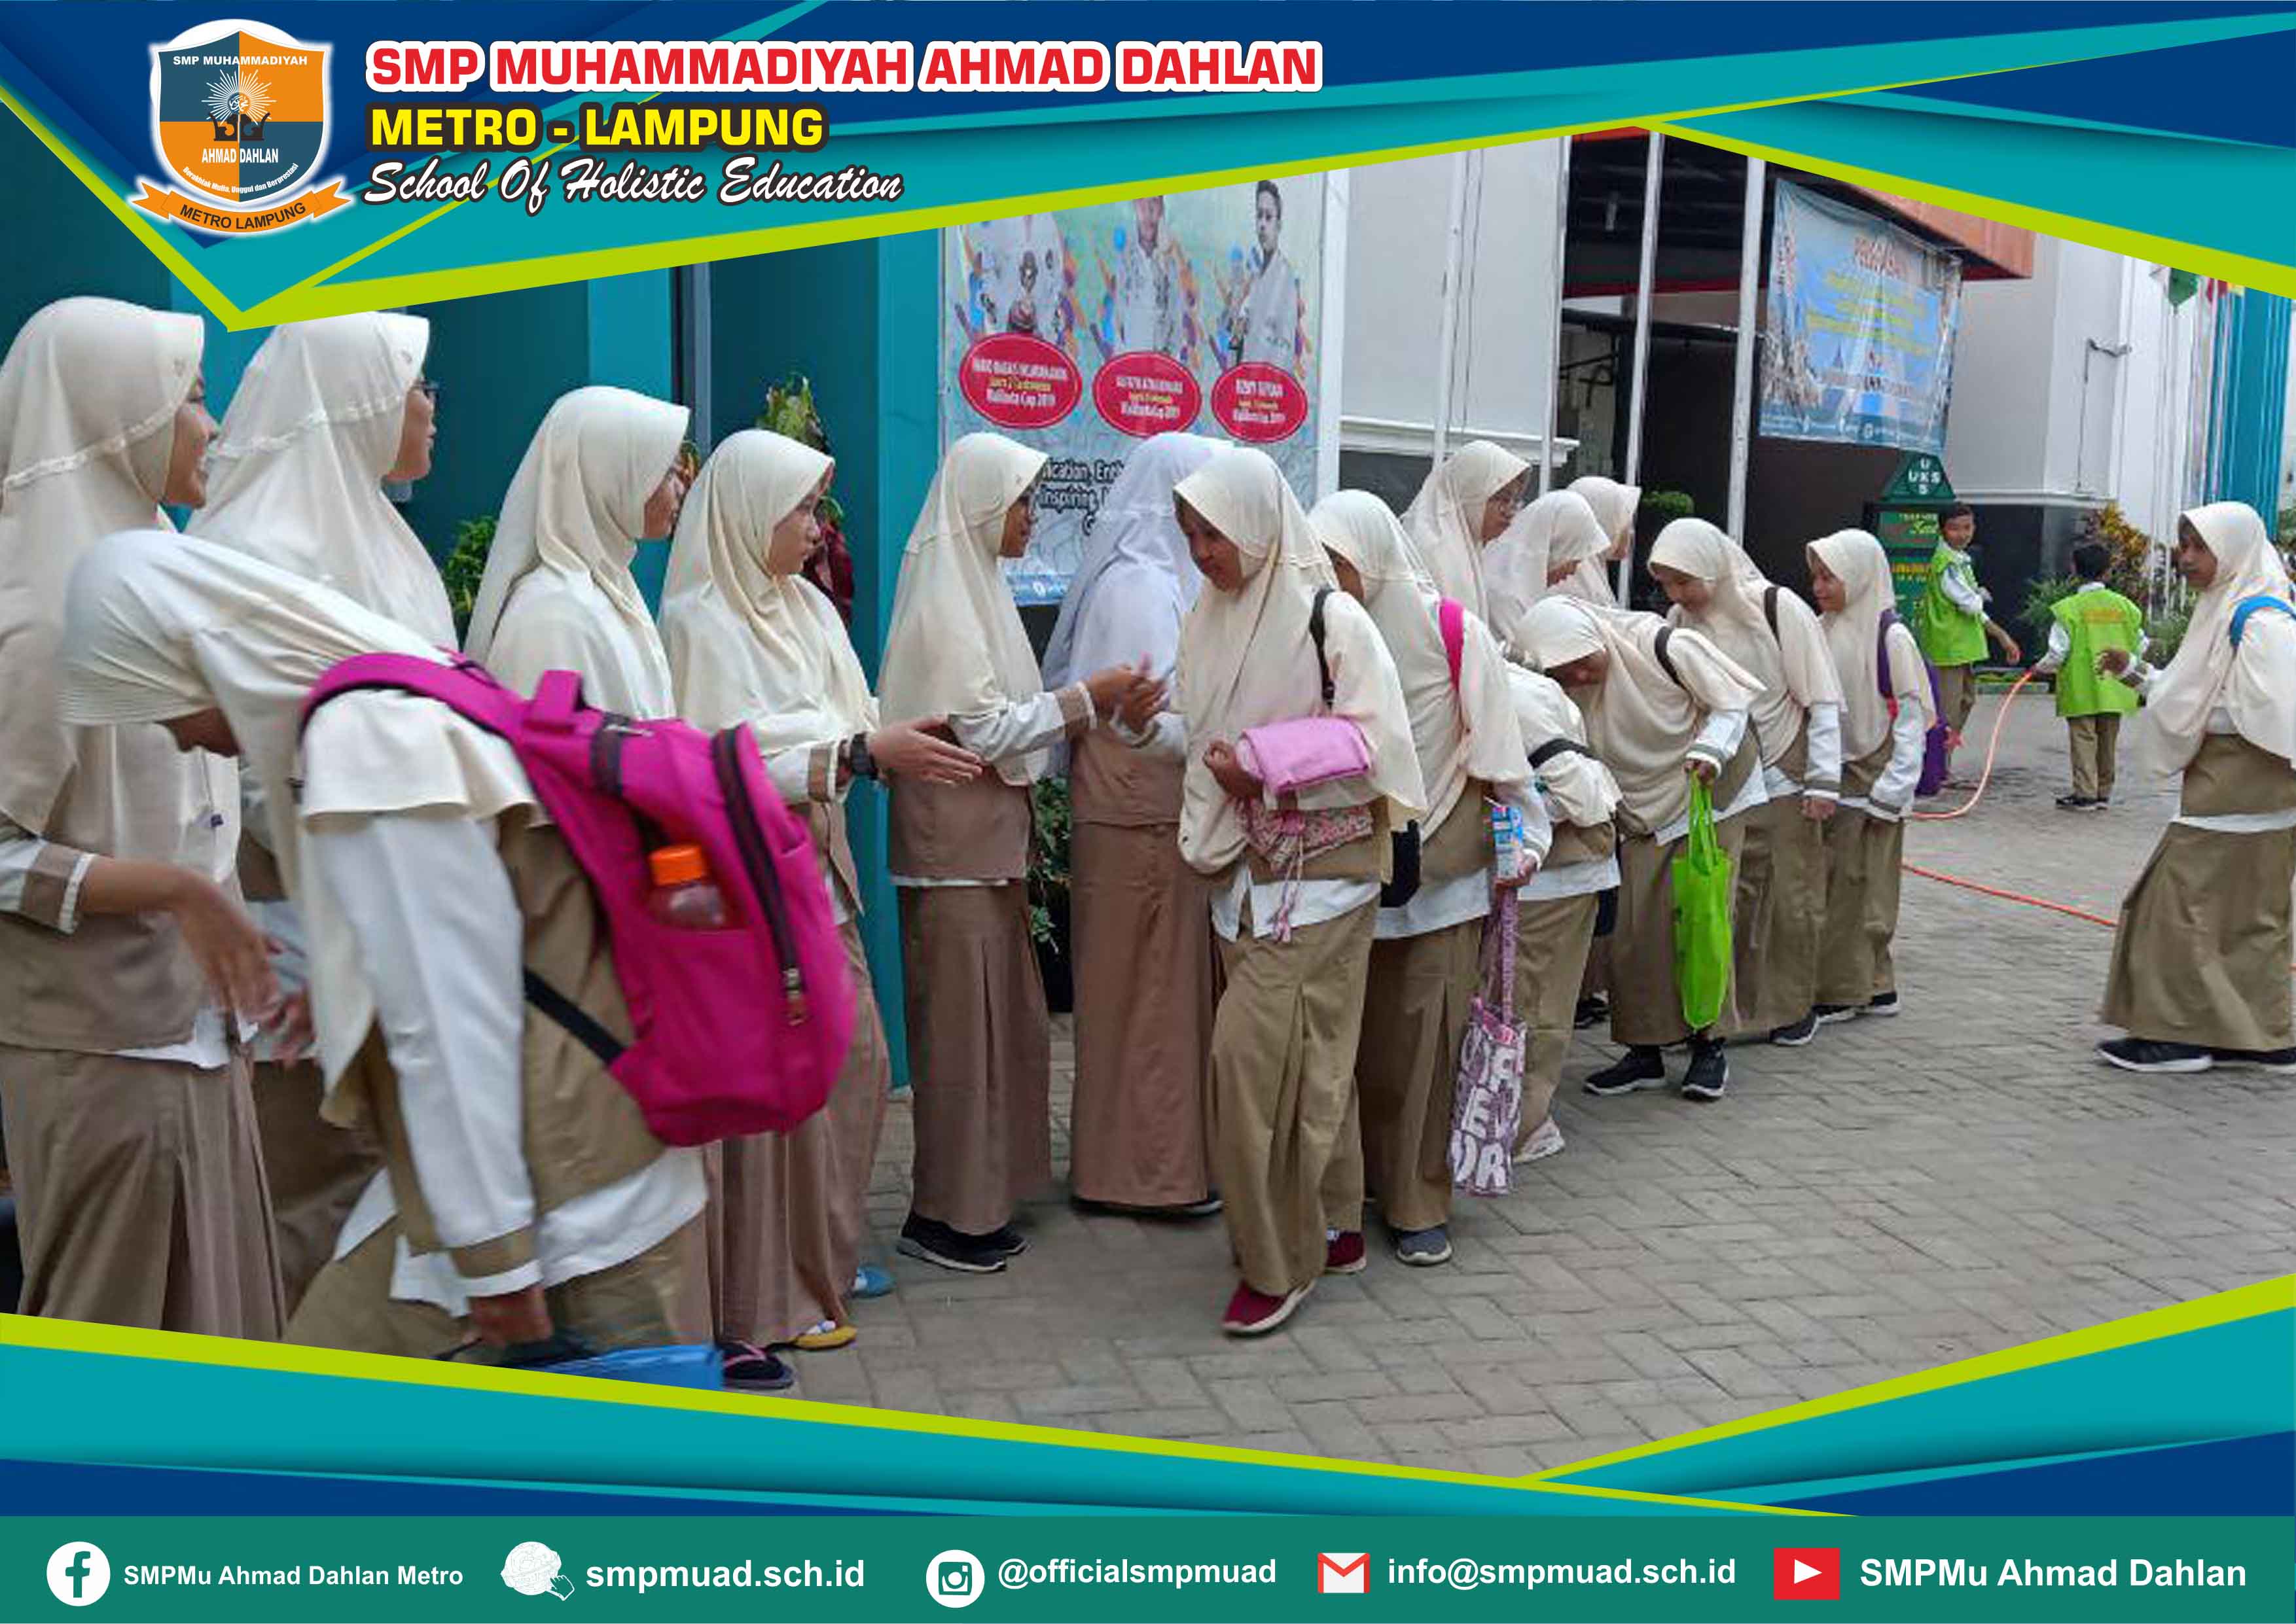 Budaya 4S di SMPMu Ahmad Dahlan Metro Lampung